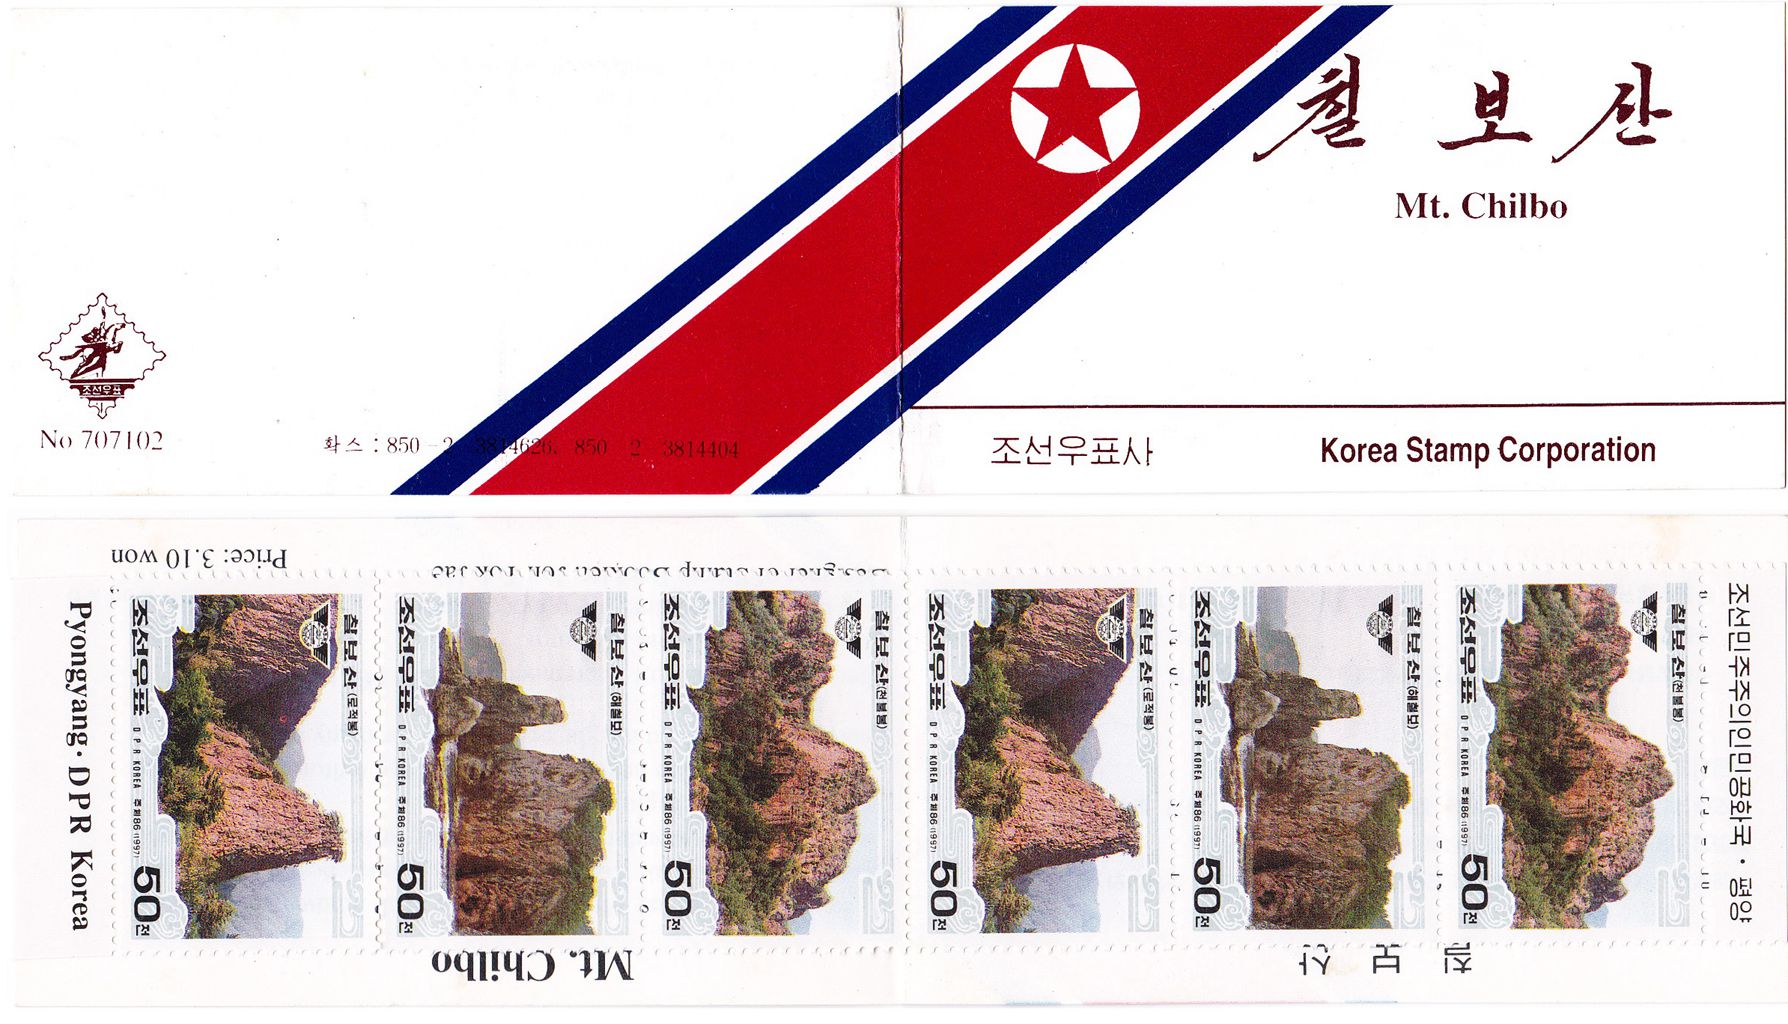 L9073, Korea "Mt Chibo" Stamp Booklet, 1997